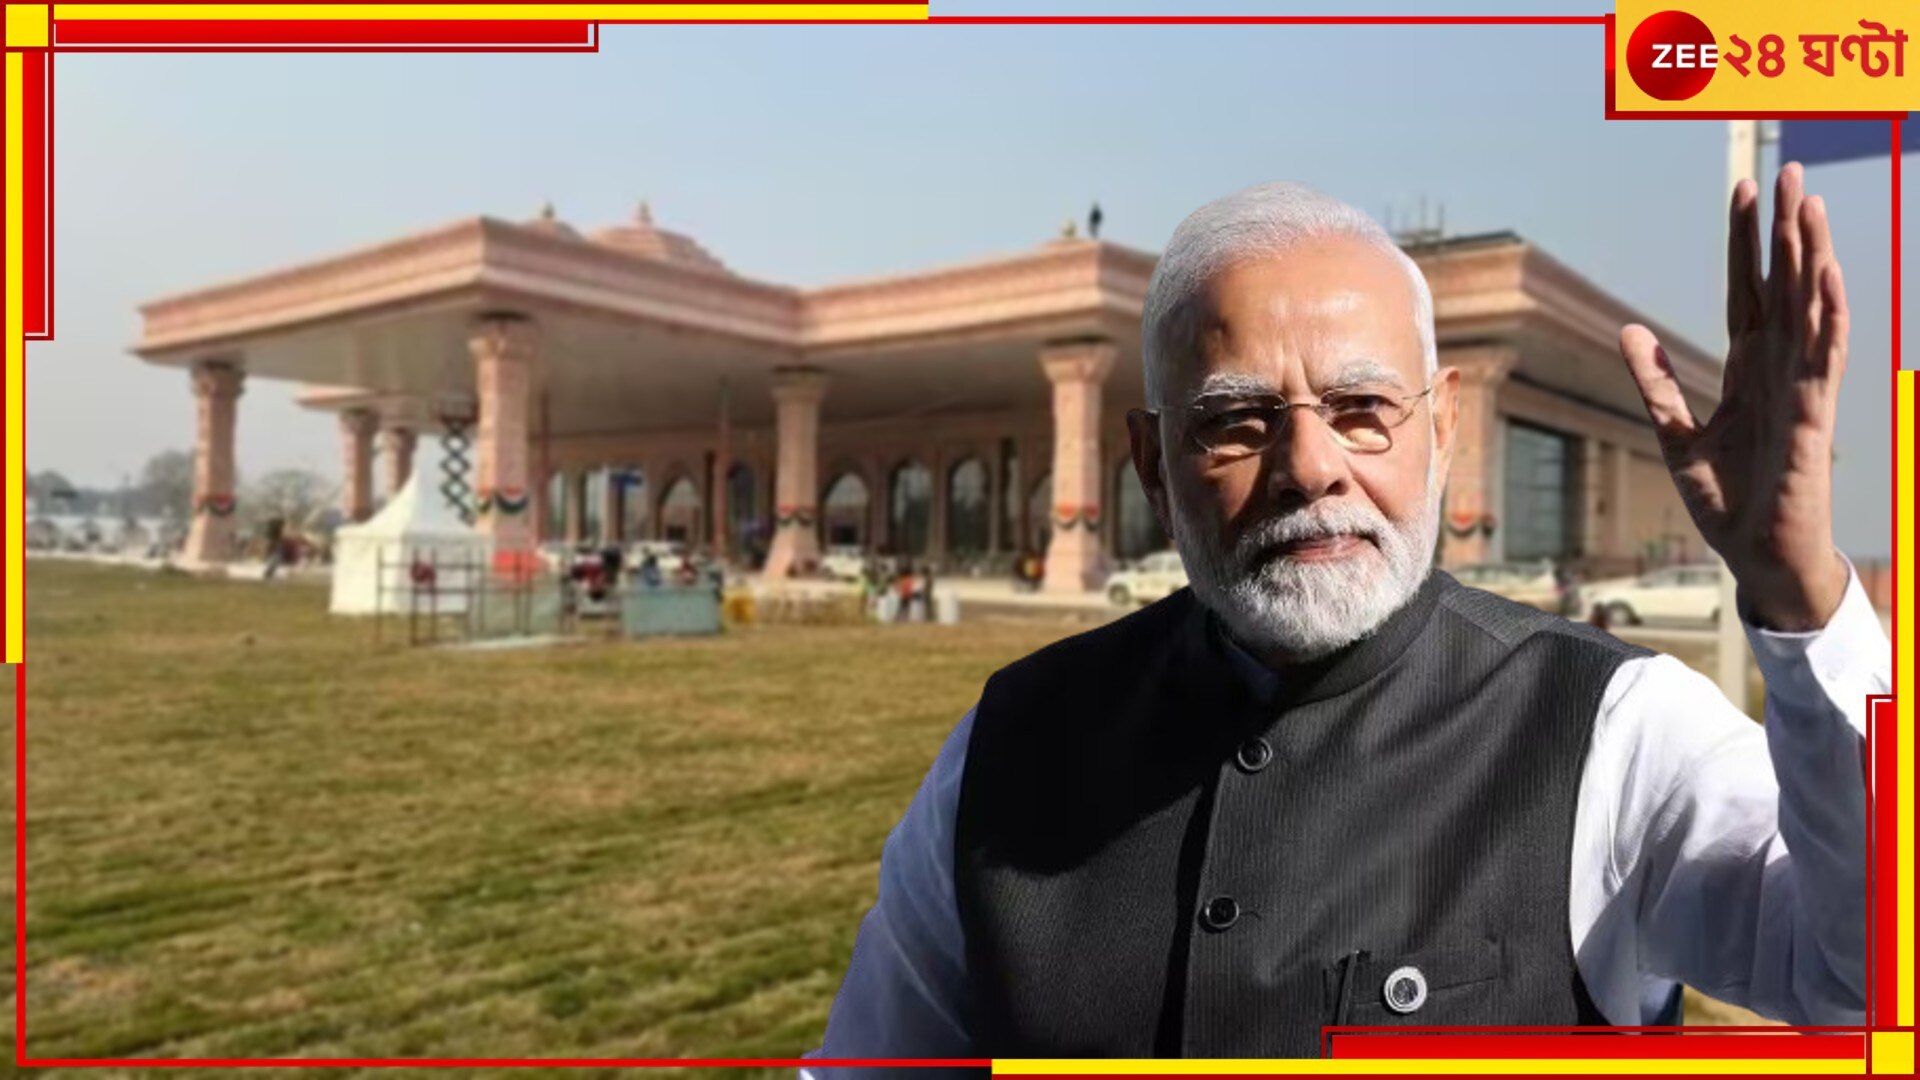 PM Modi Ayodhya Visit: মোদীর মেগা শো! বিমানবন্দর থেকে স্টেশন উদ্বোধন ঘিরে সরযূপাড়ে সুরক্ষাবলয়